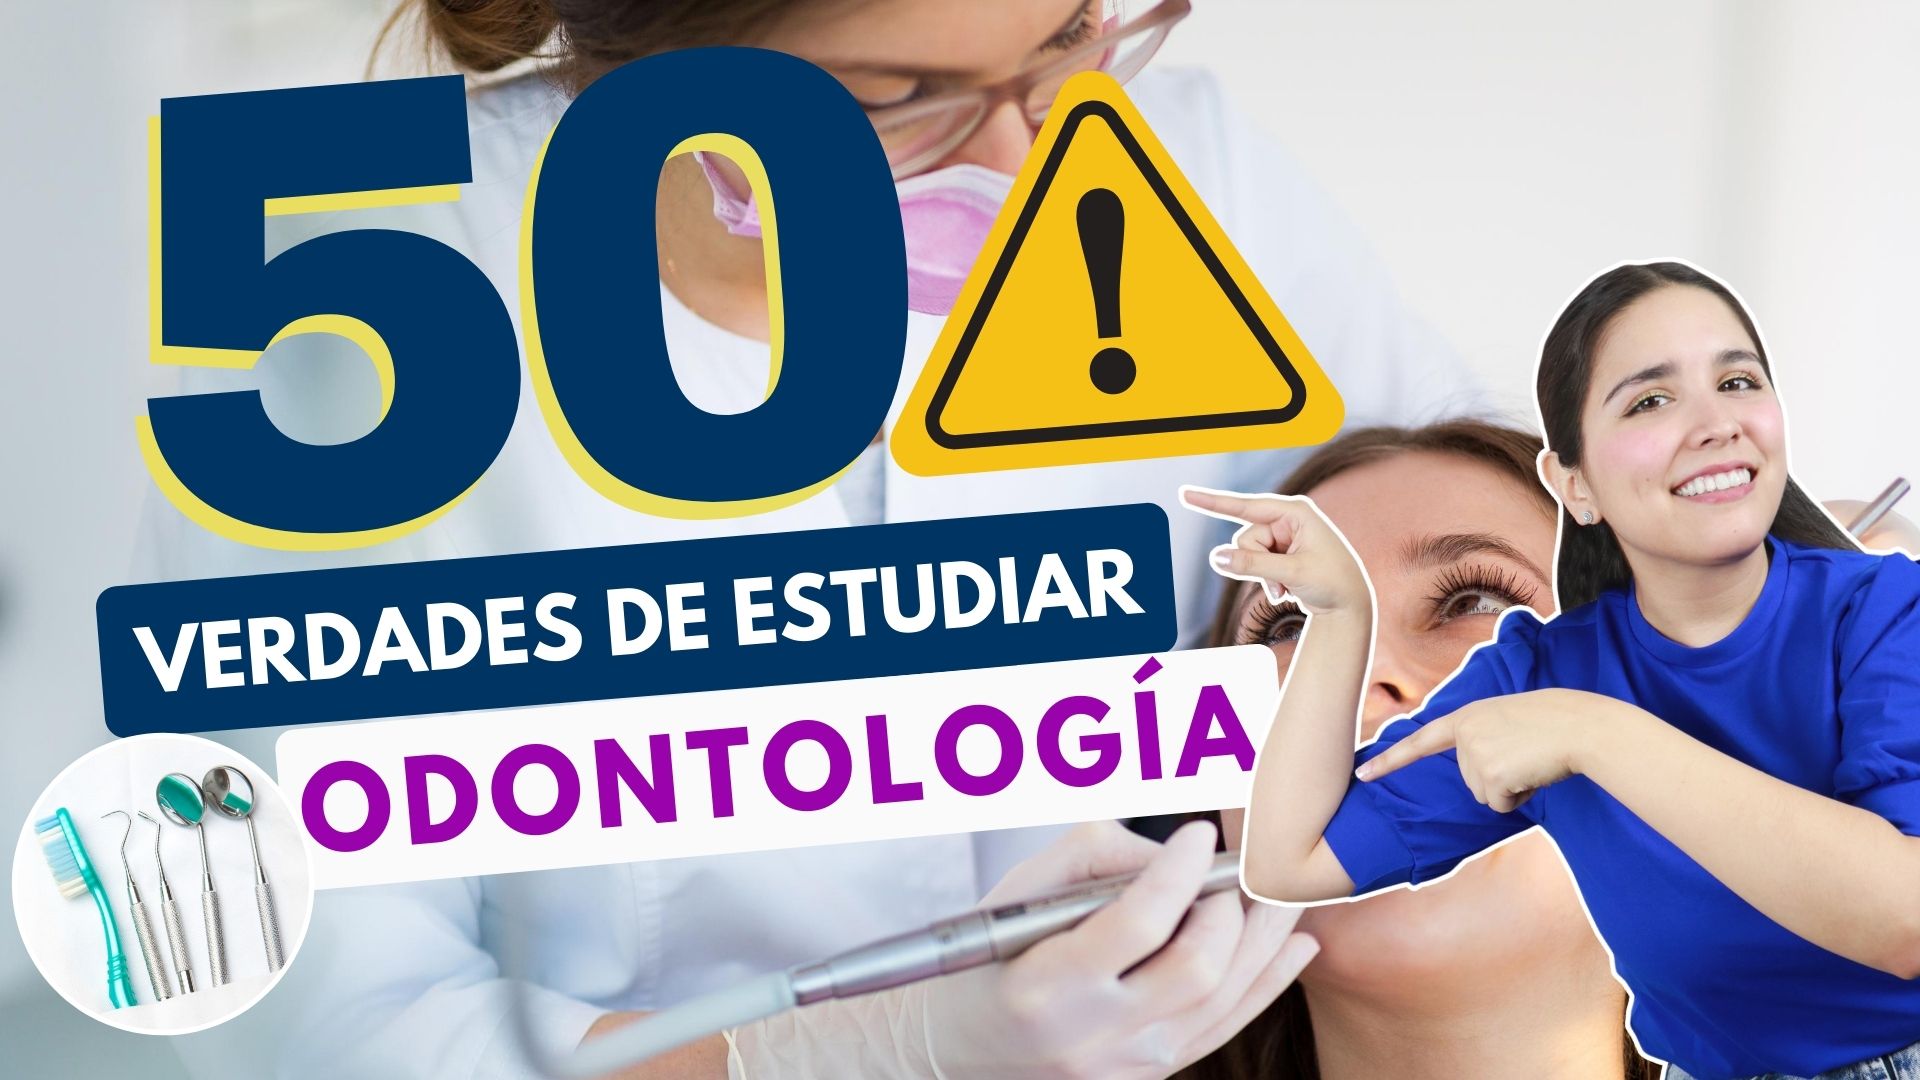 Estudiar odontología: 50 cosas que debes de saber para ser dentista